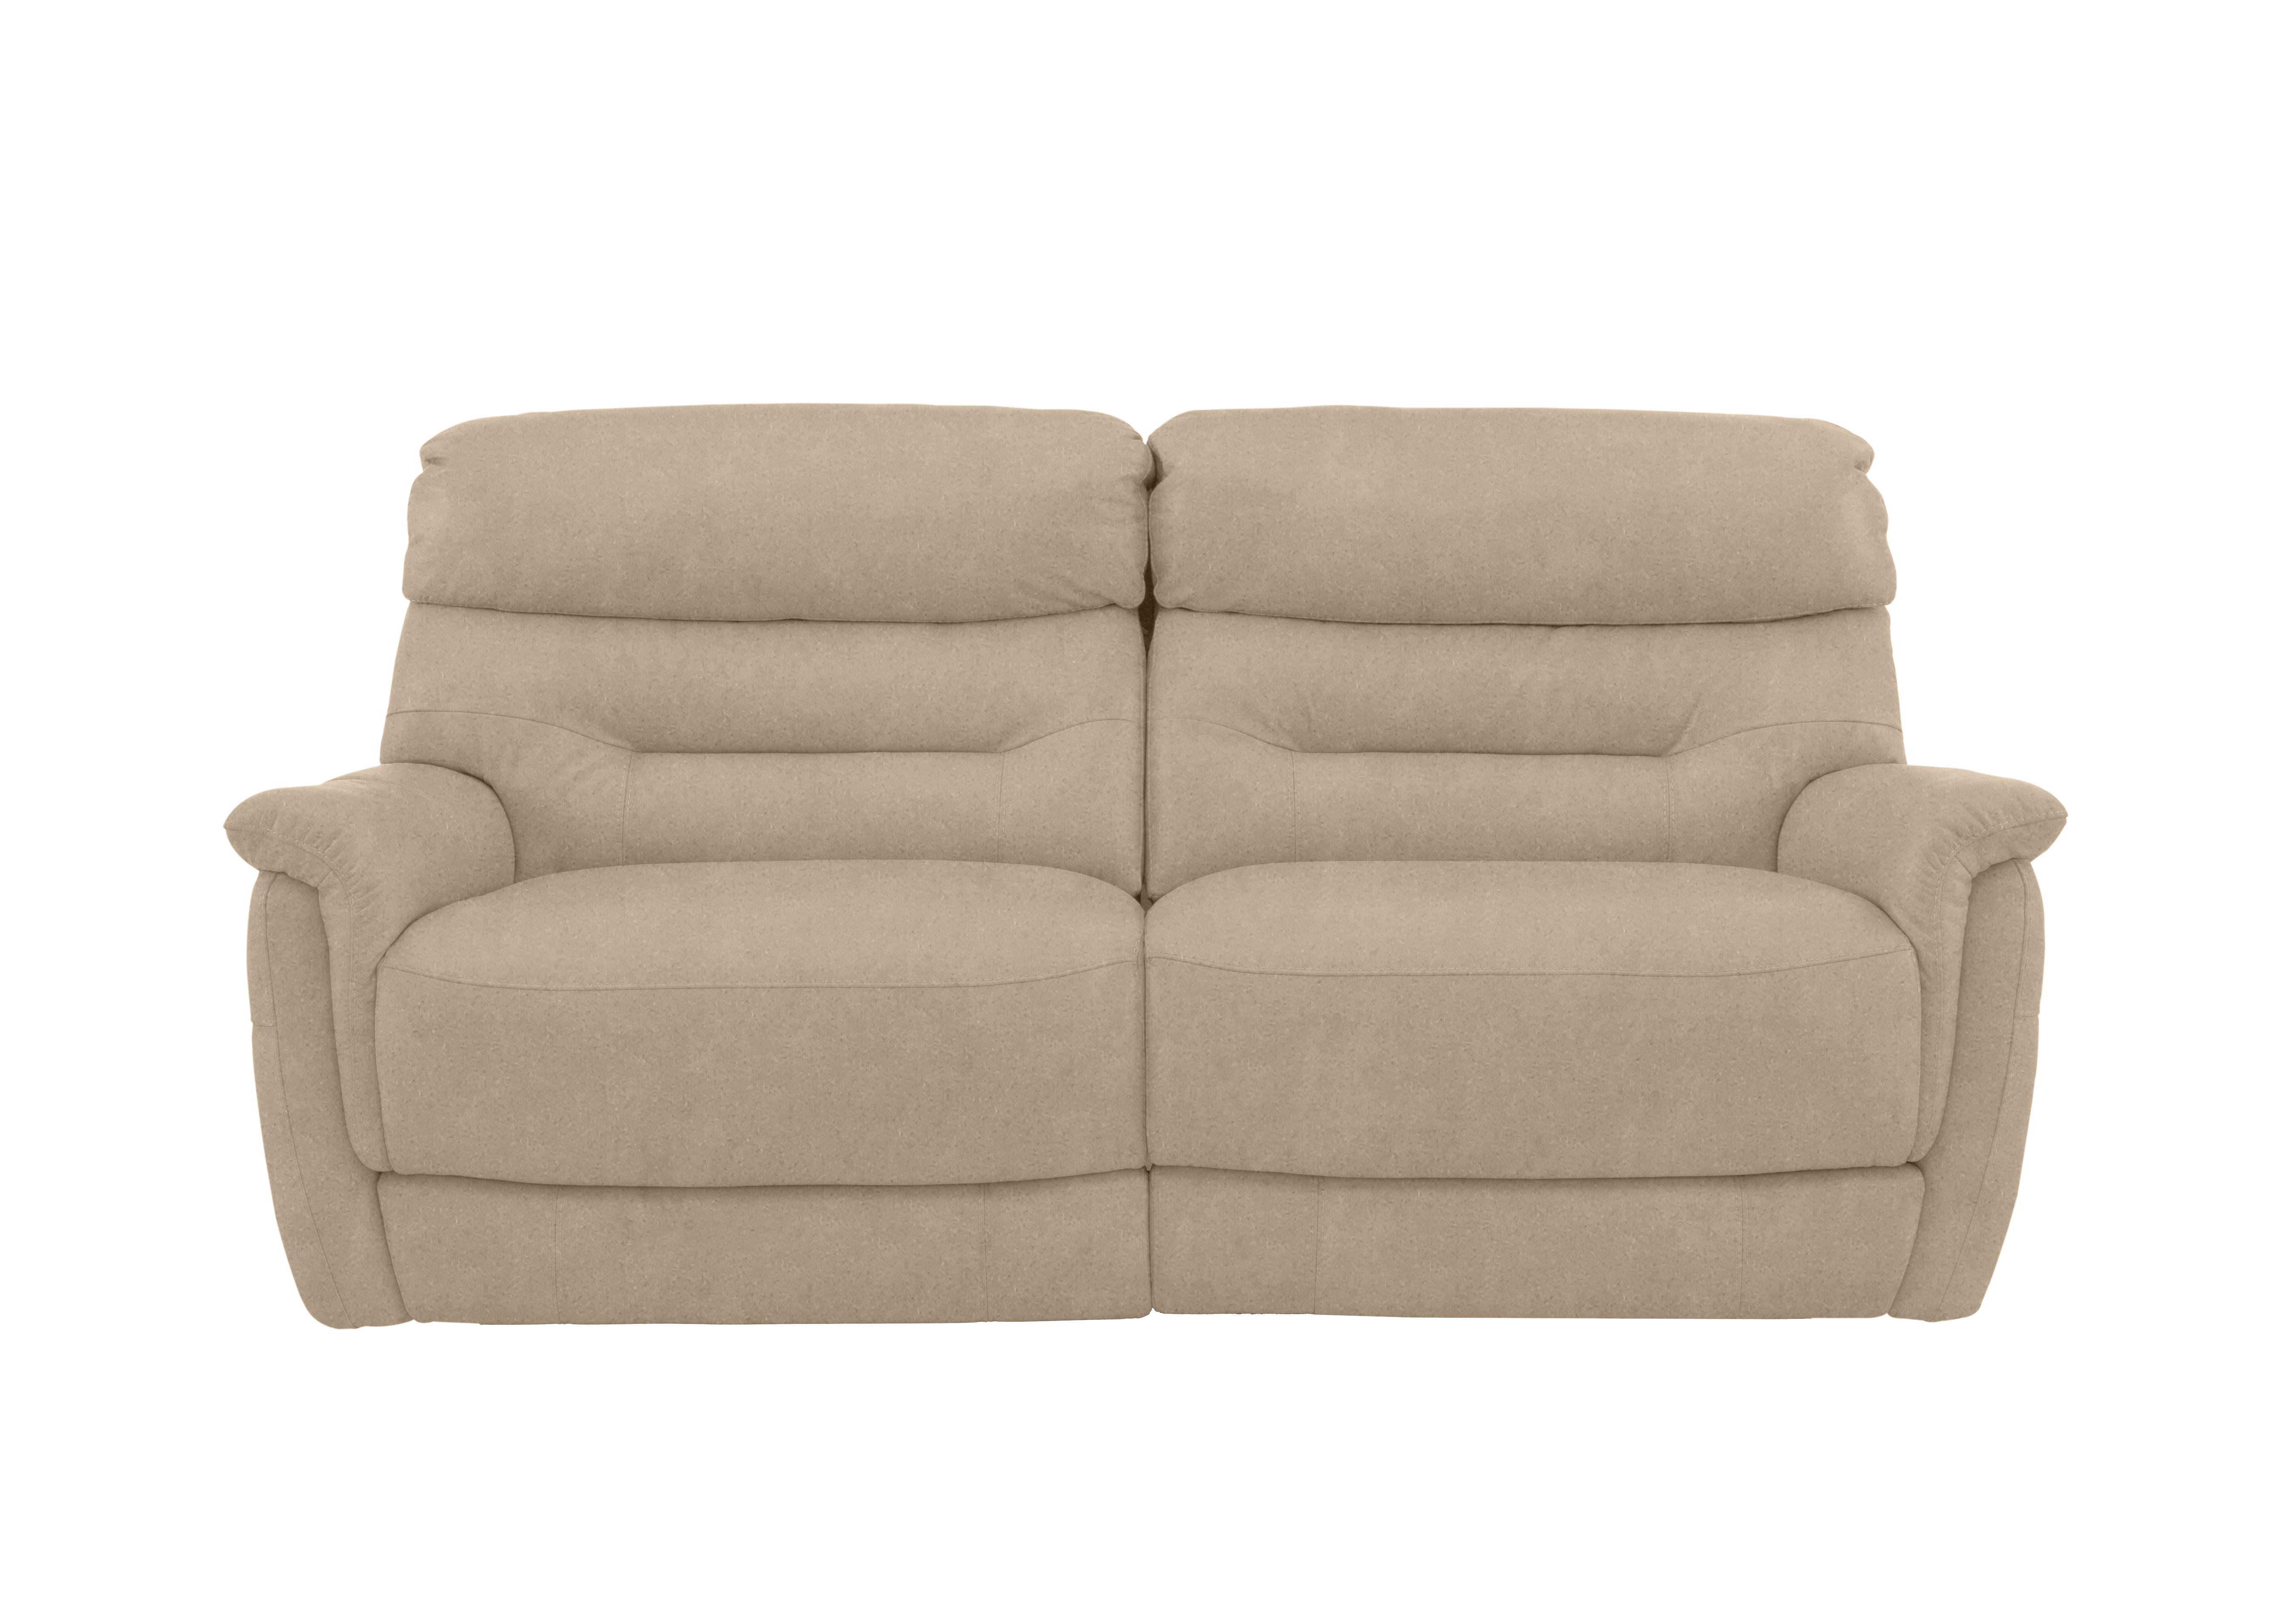 Chicago 3 Seater Fabric Sofa in Bfa-Blj-R20 Bisque on Furniture Village